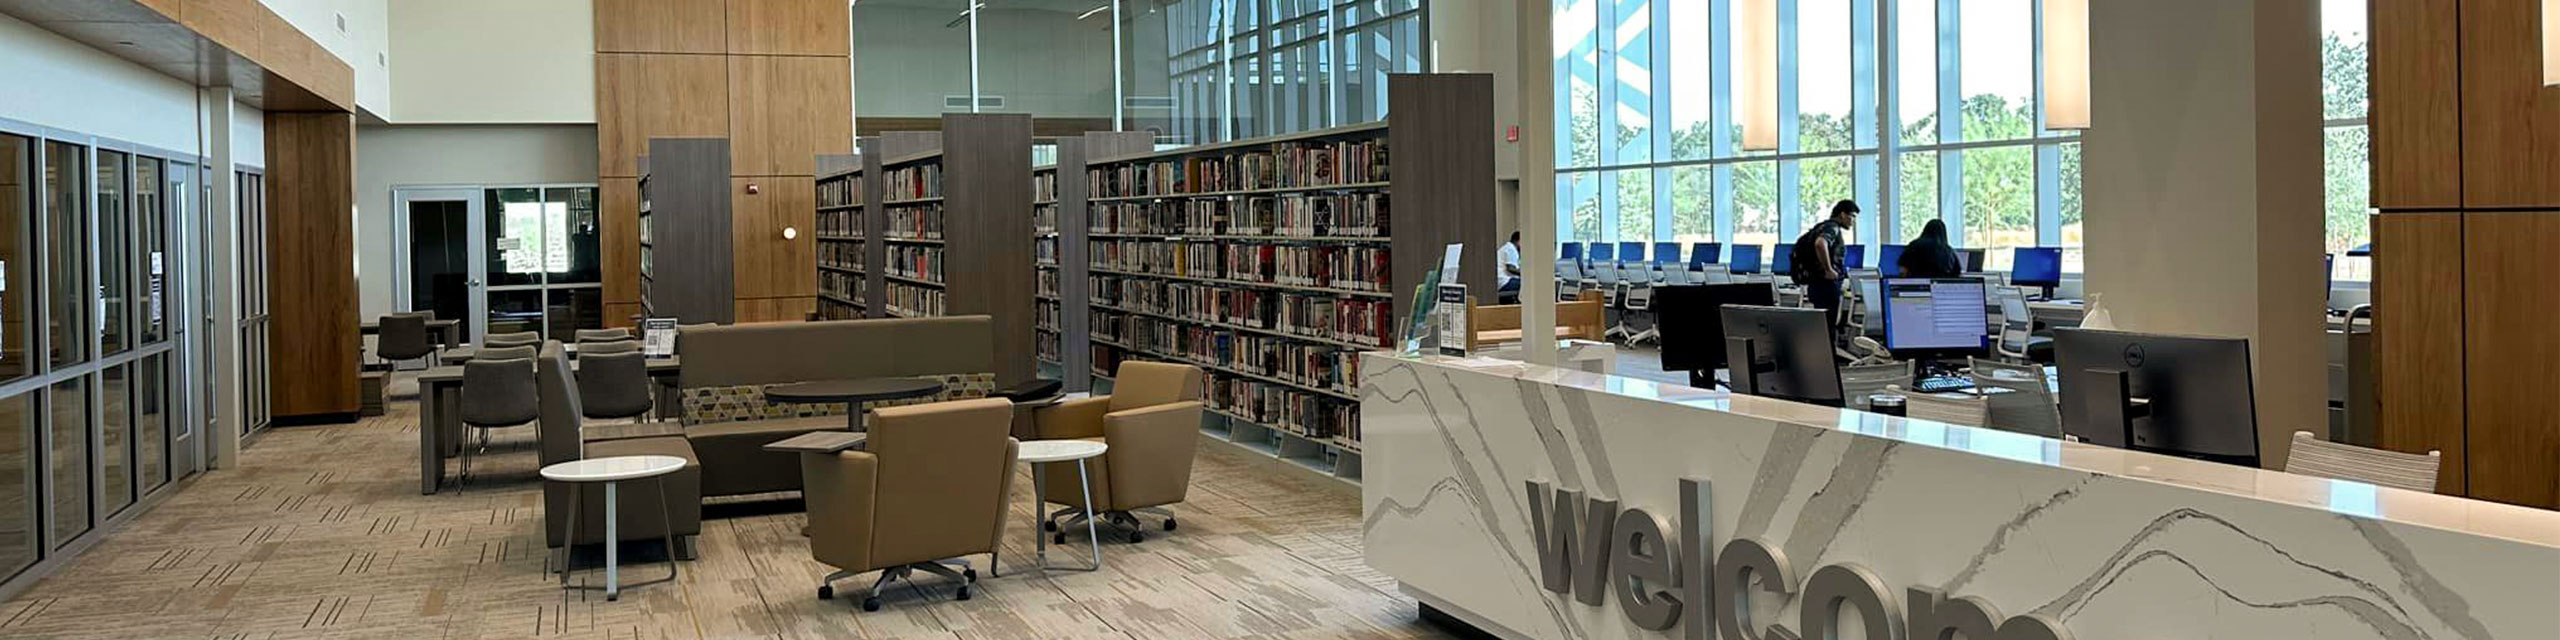 MCC Library 